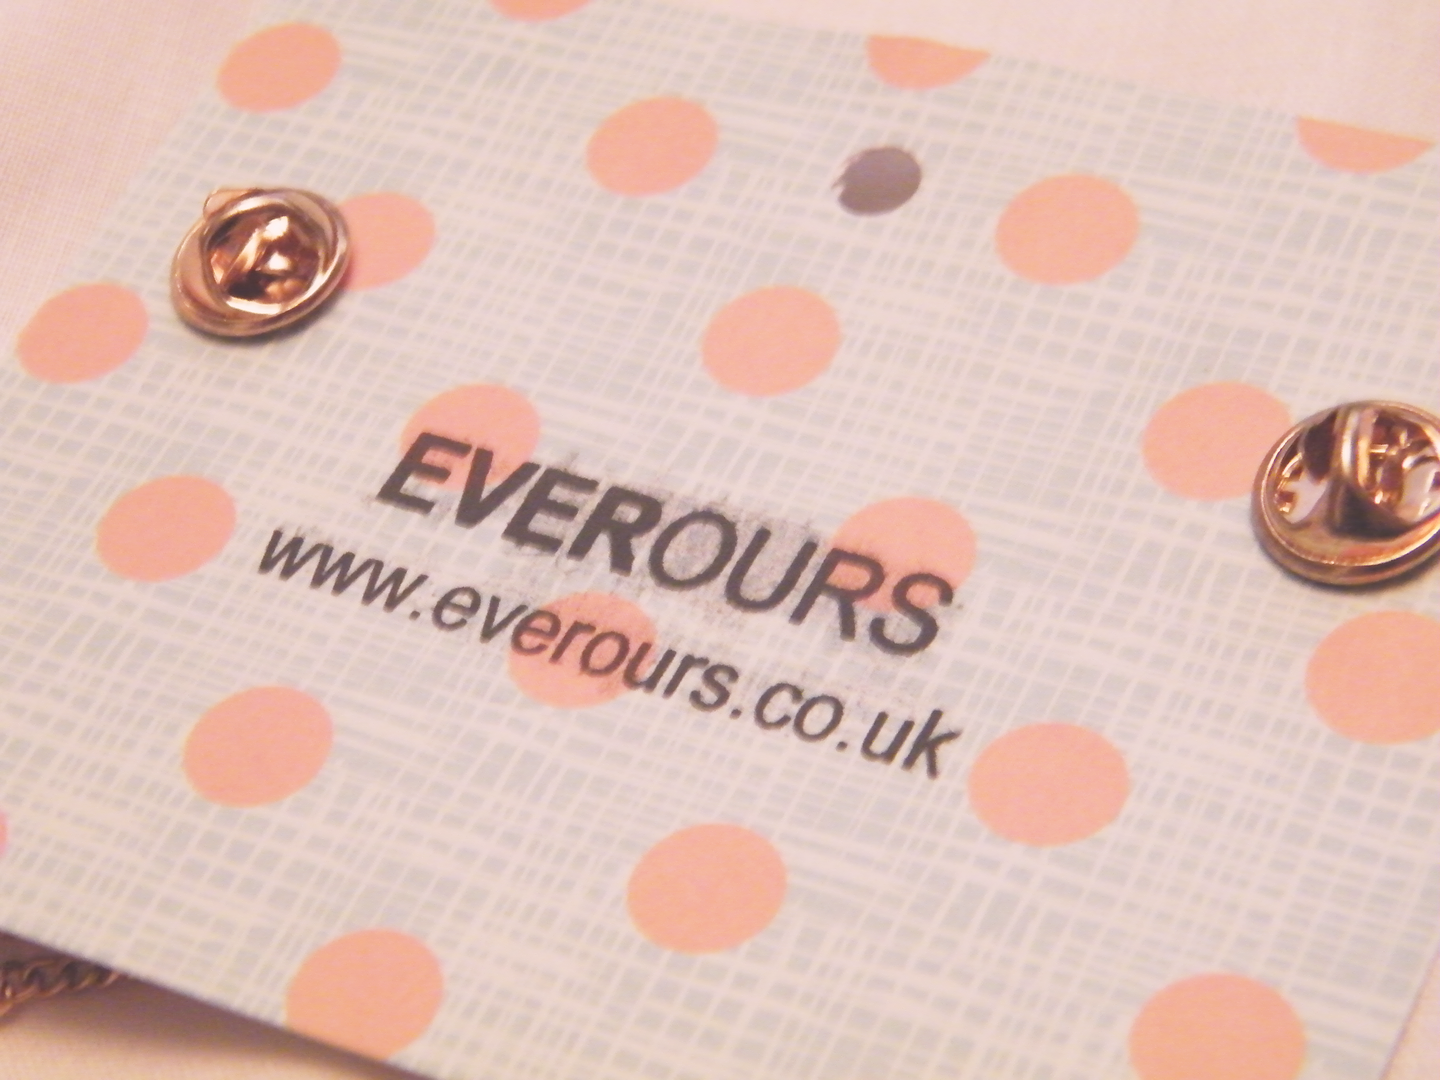 EverOurs Collar Pins